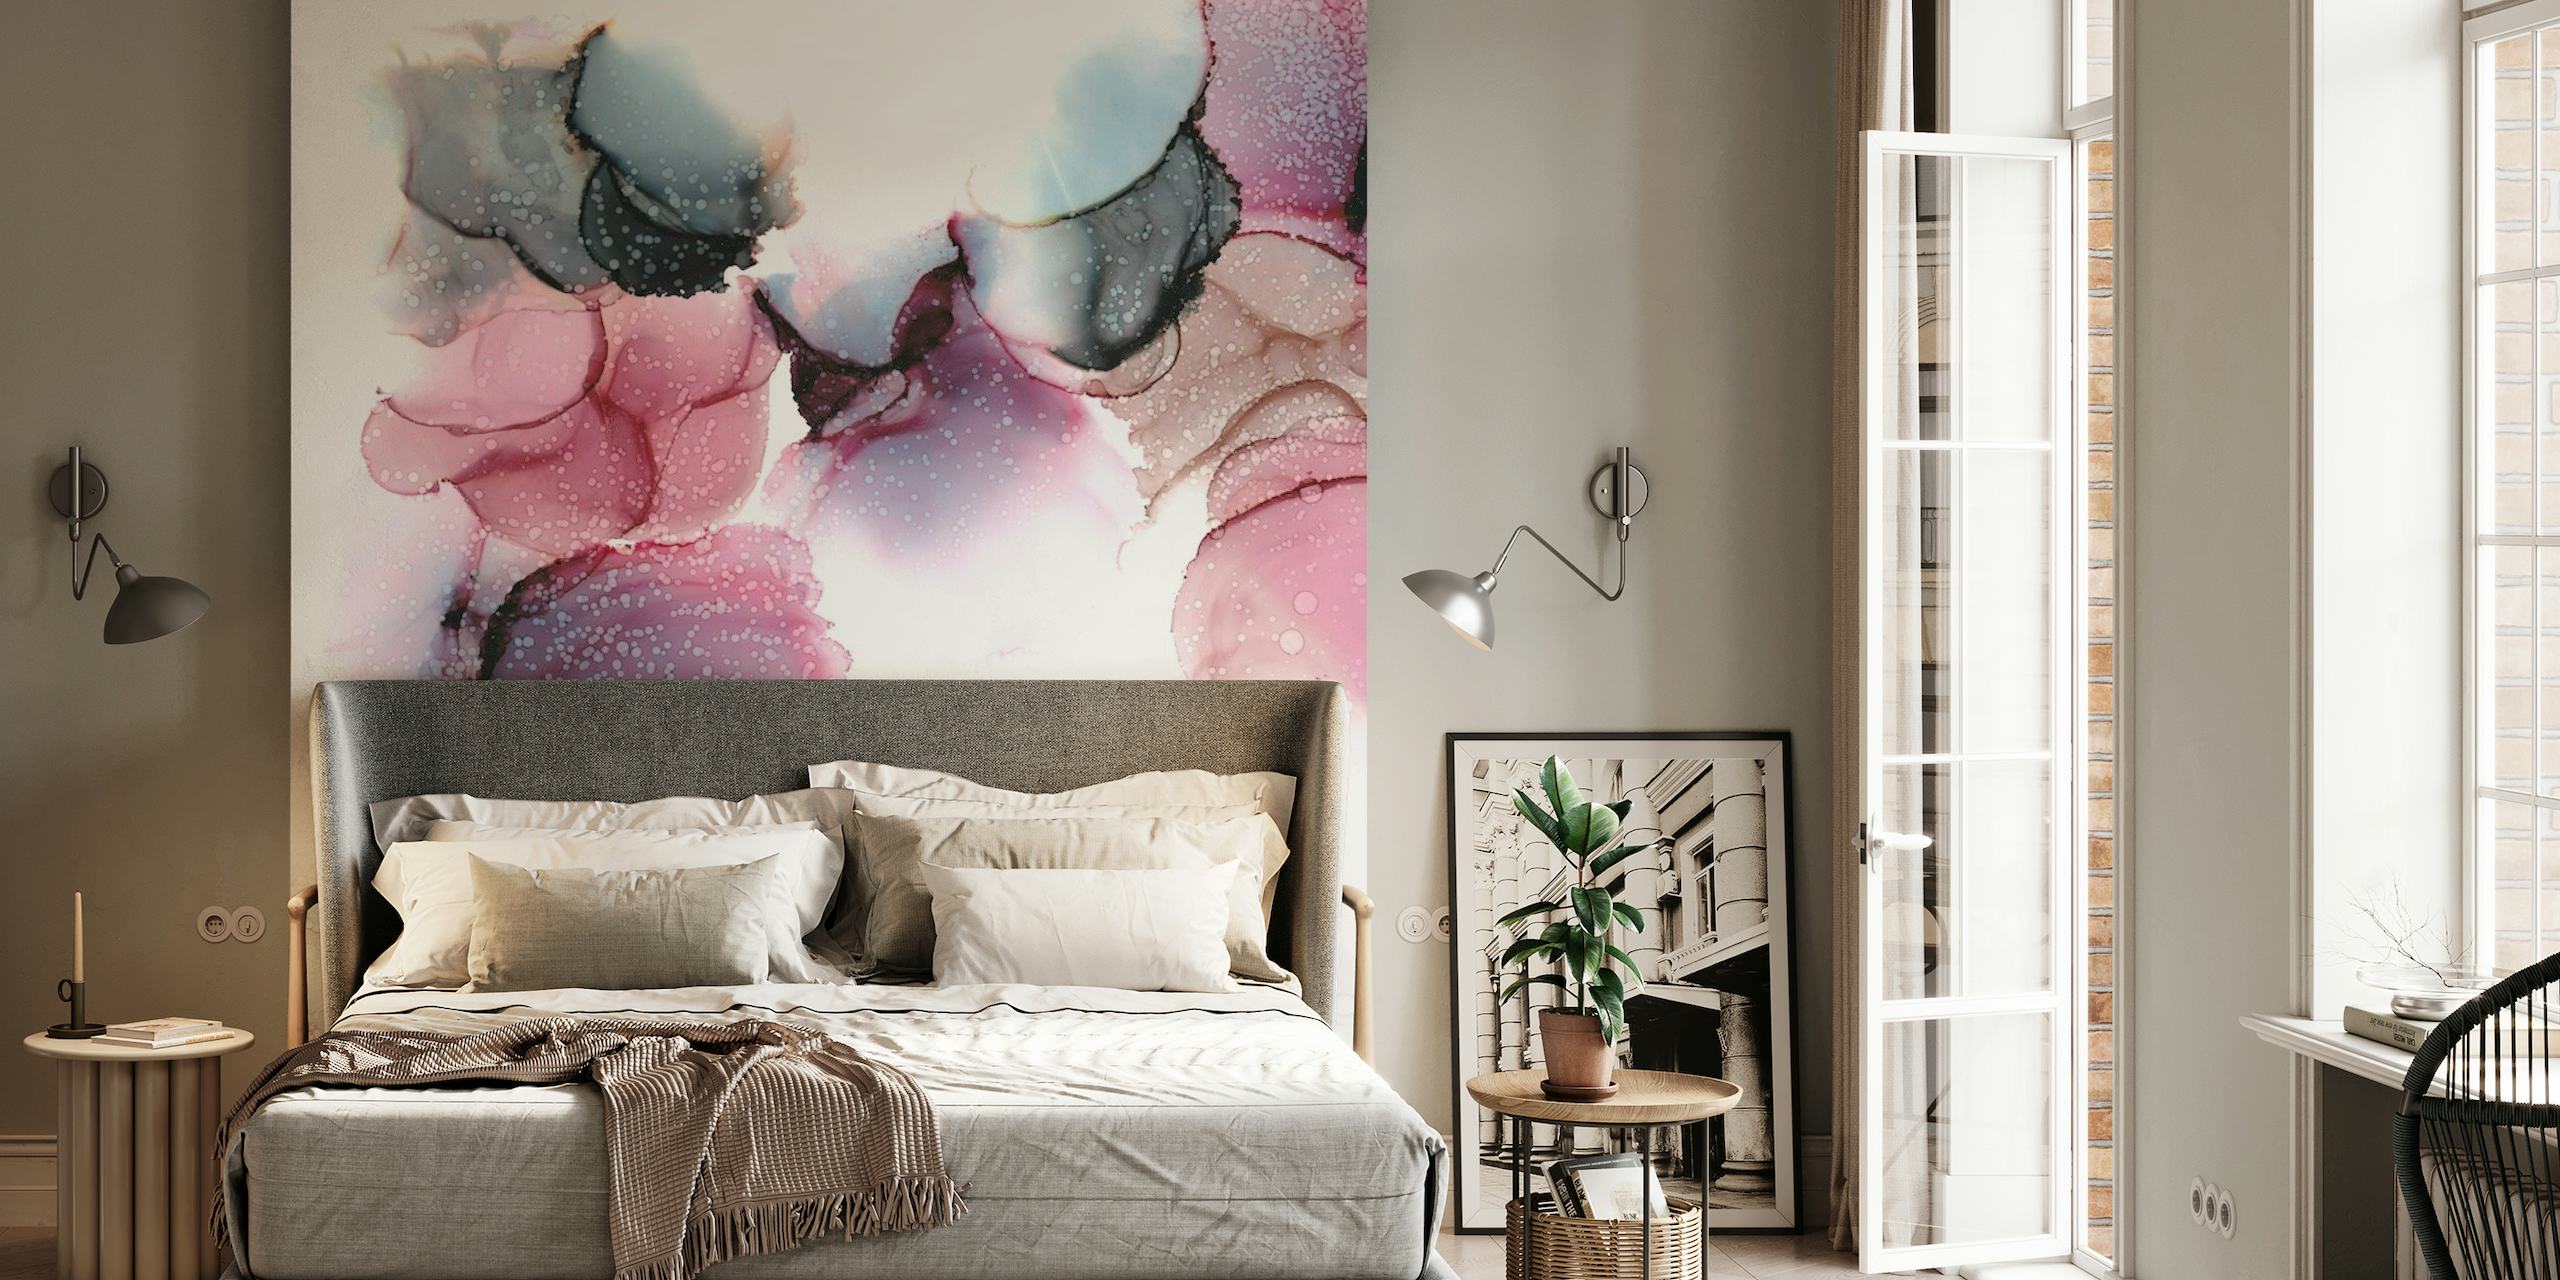 Abstrakt bobletelt-vægmaleri med bløde lyserøde og grå akvarelpletter